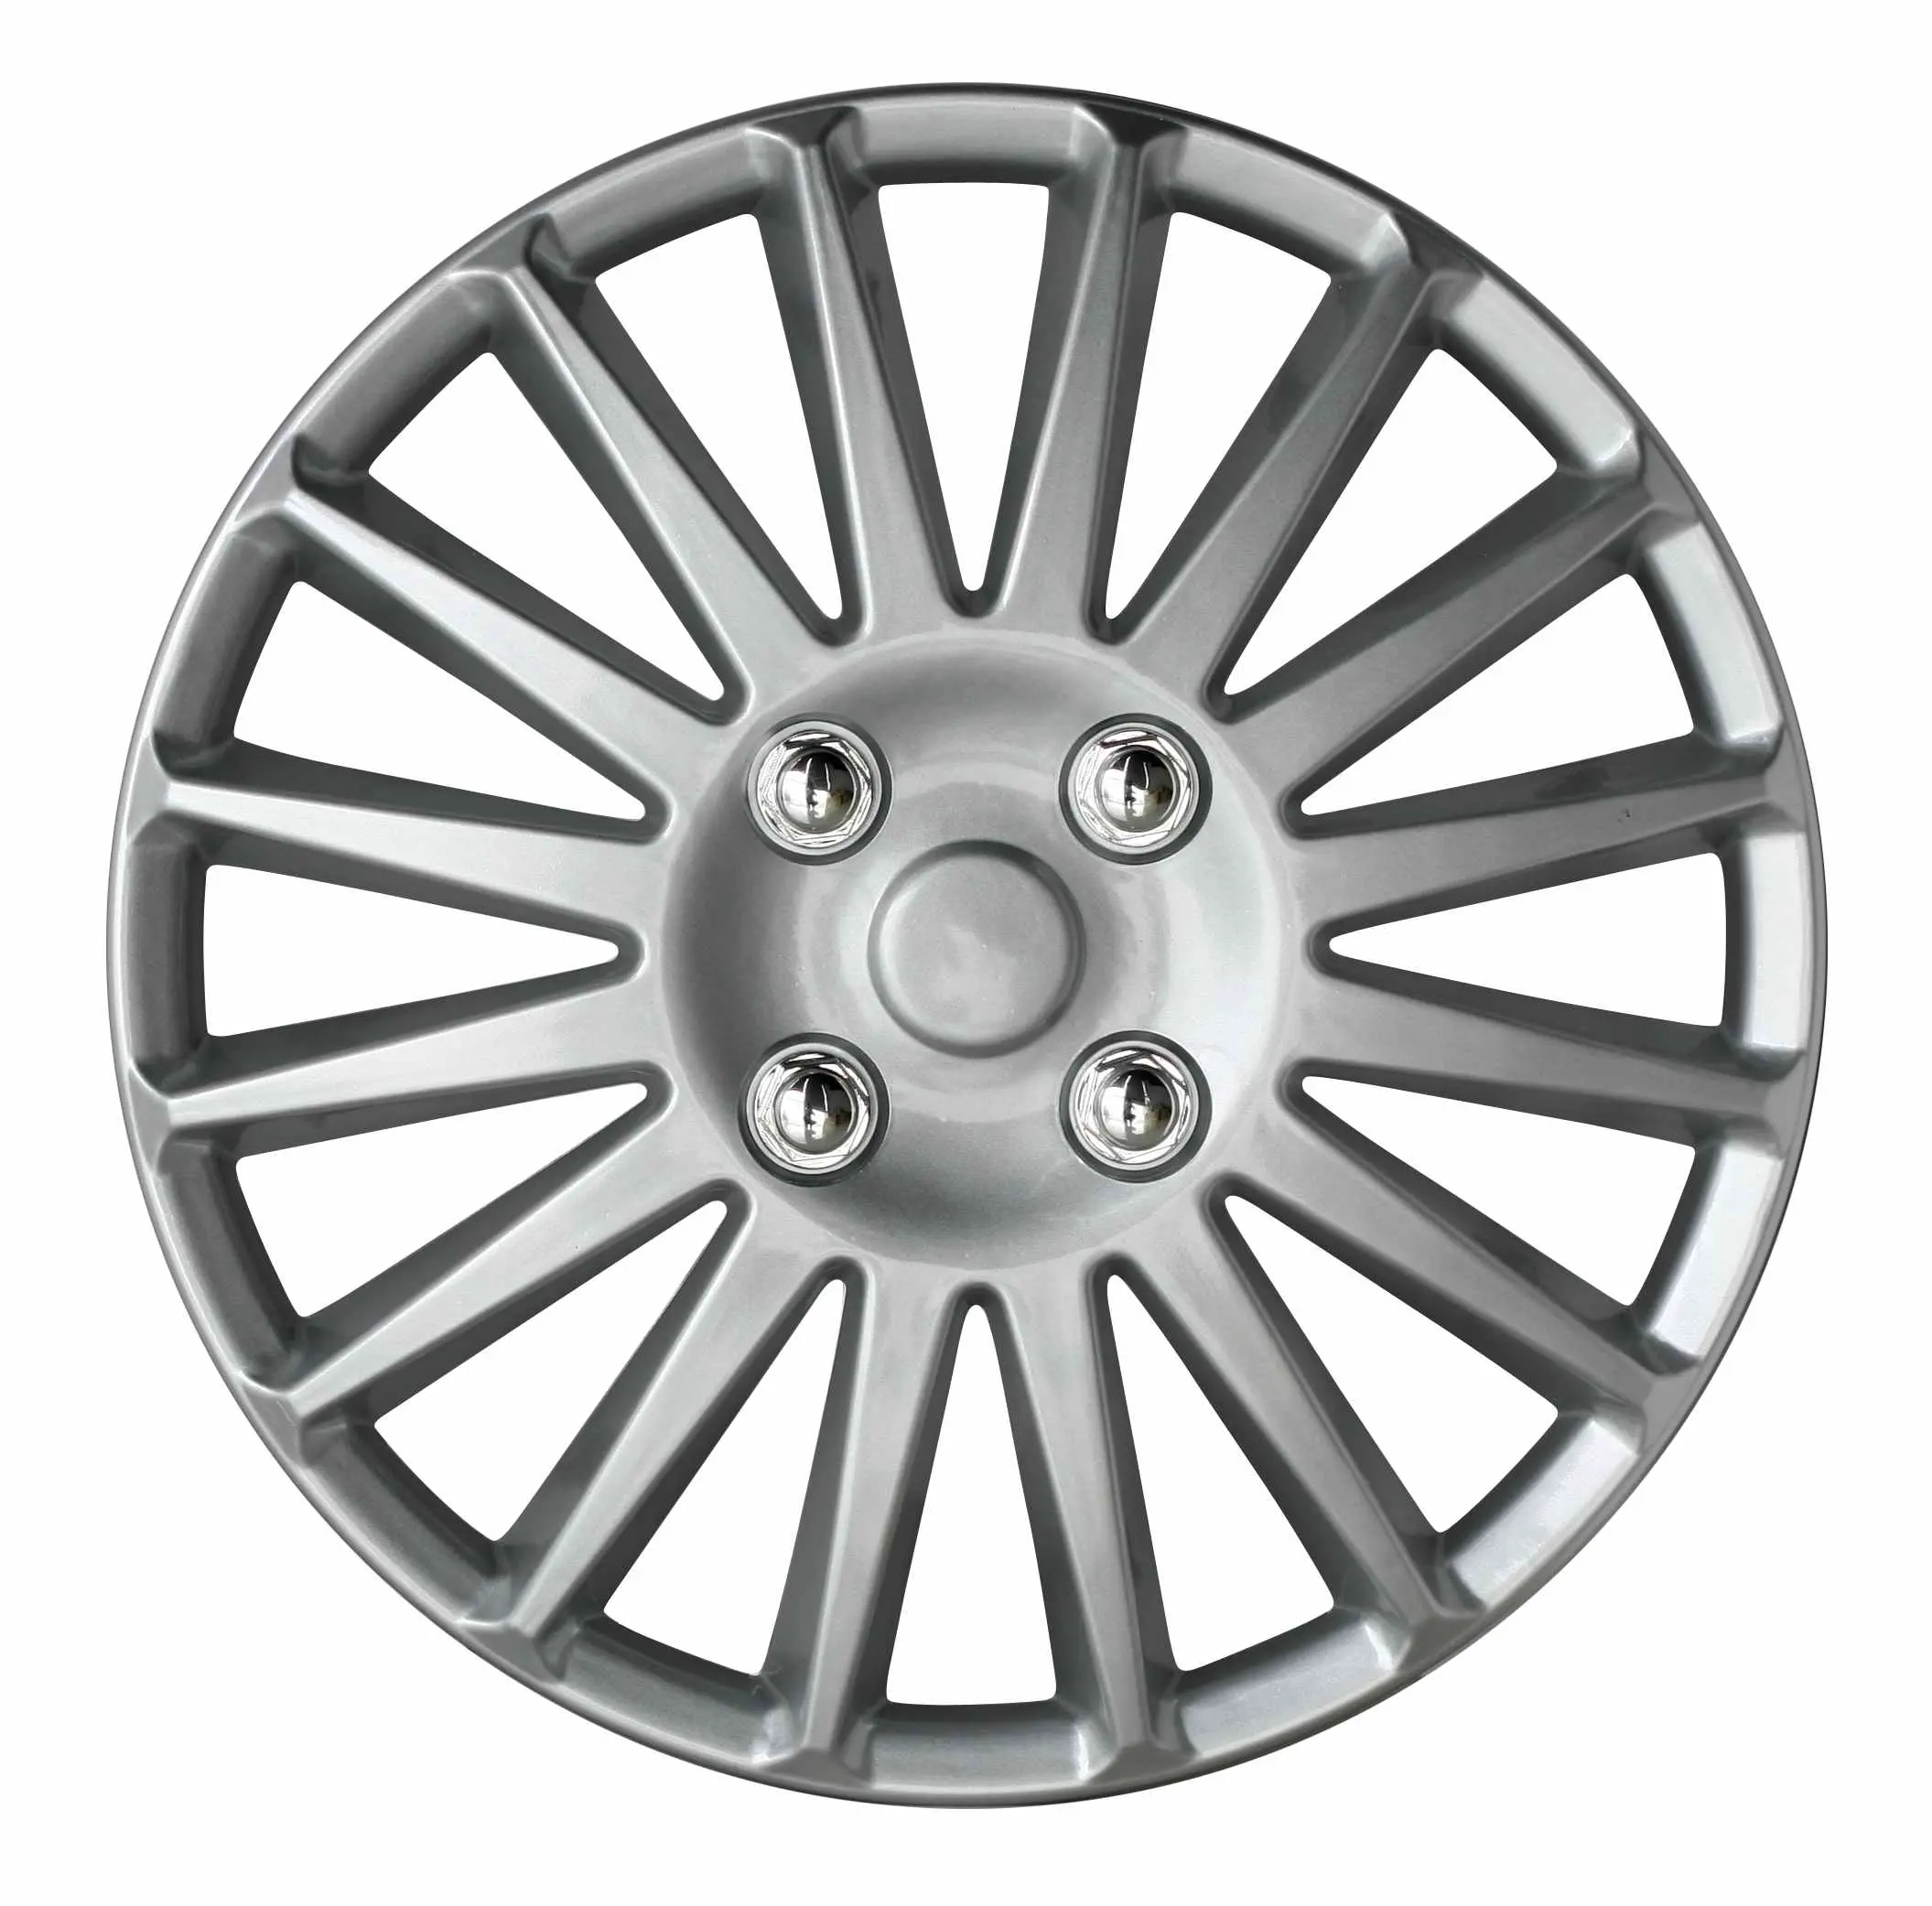 Winjet hot selling universal car wheel rim cap cover for 12 13 14 15 16 inch wheel